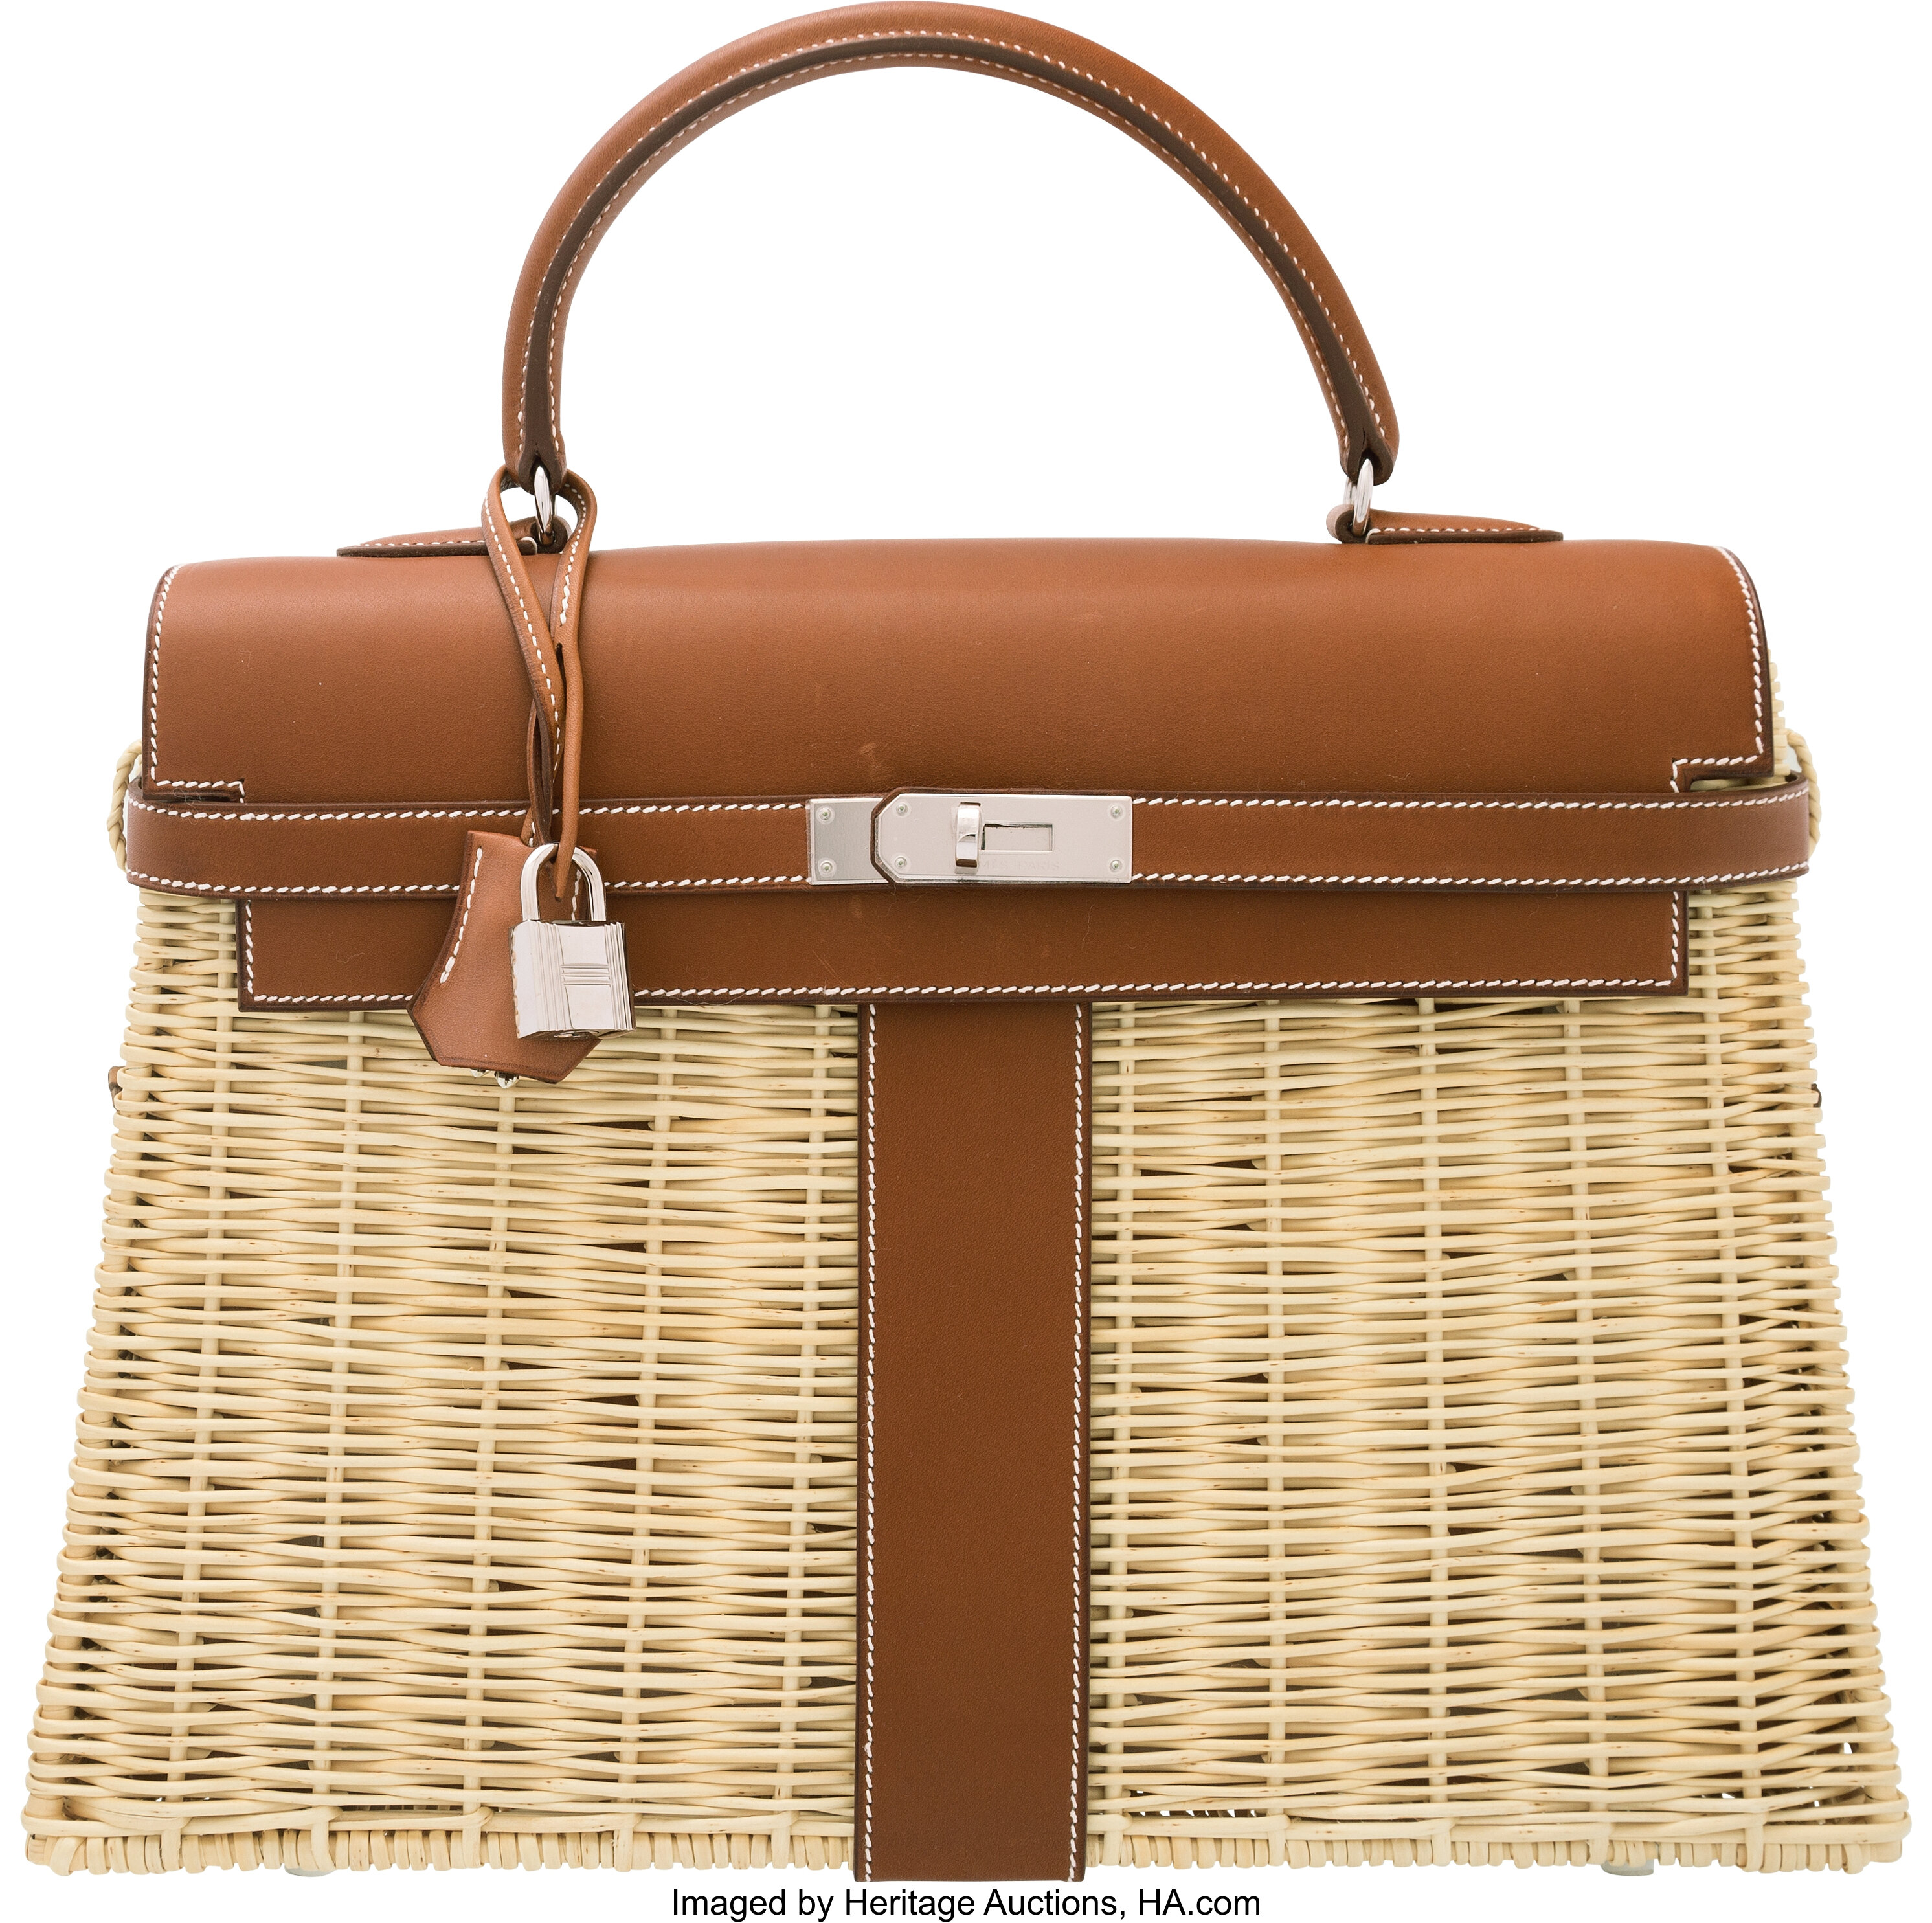 Reserved The Garden Party Hermes Wicker basket bag Ltd - Katheley's